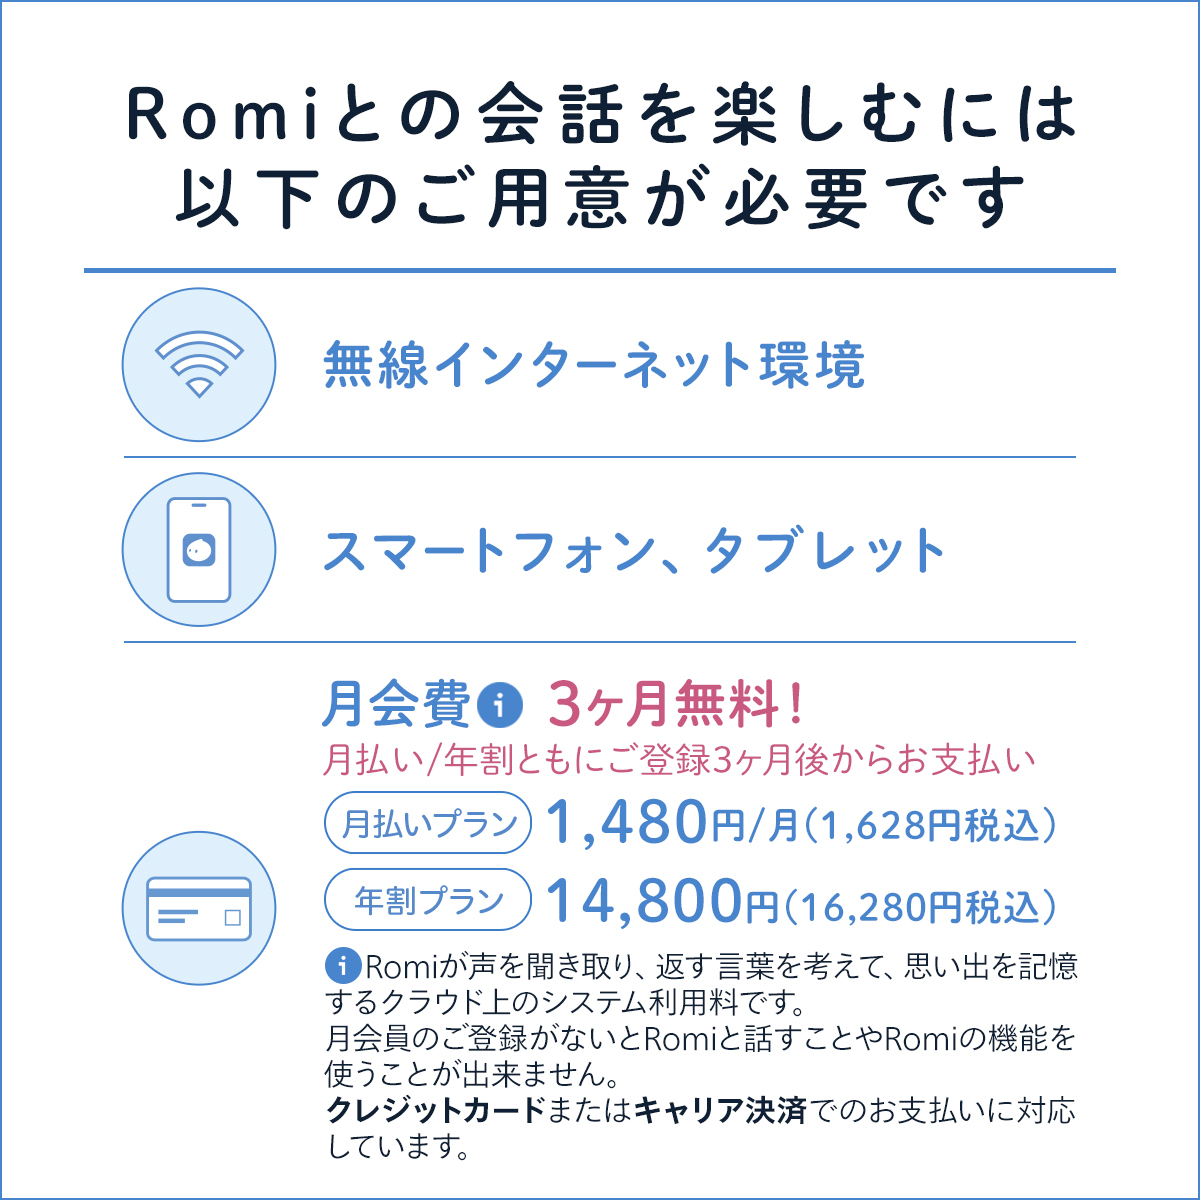 Romi MIXI公式 コミュニケーションロボット ロミィ AI ロボット パール 